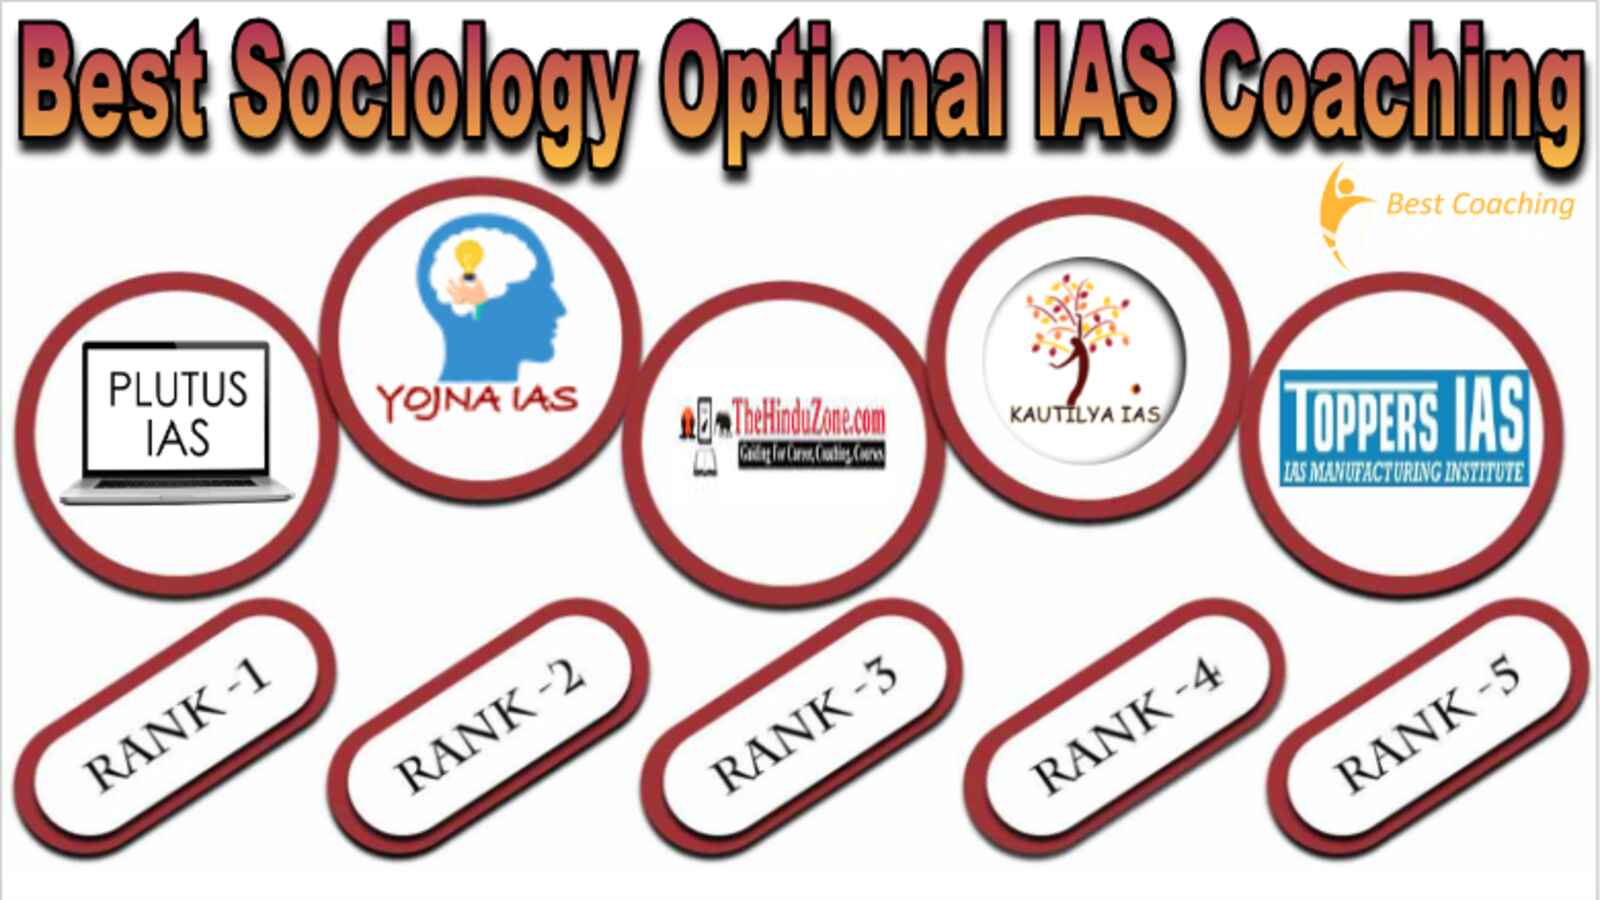 Best Sociology Optional IAS Coaching in Delhi